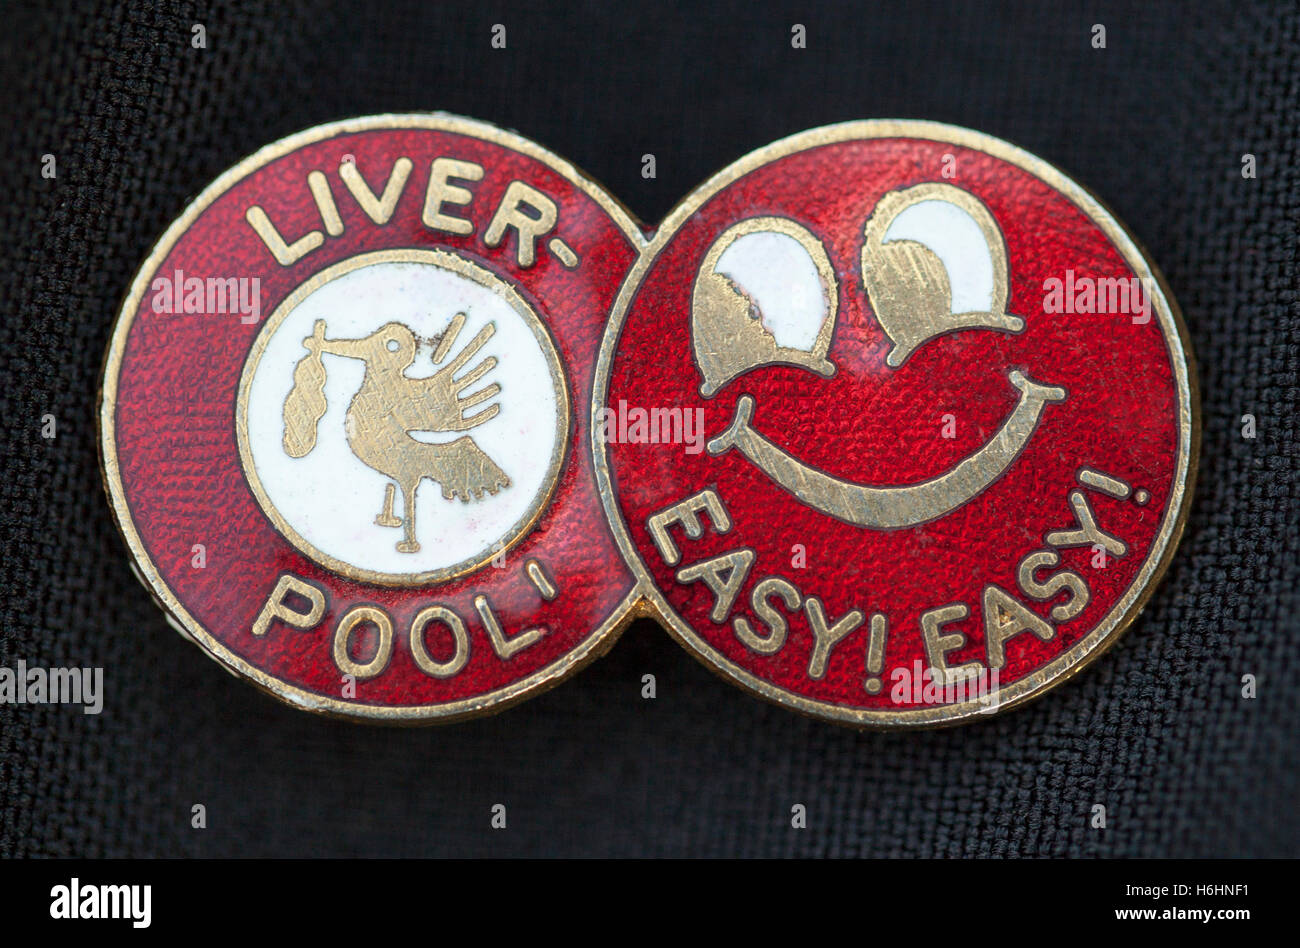 Old Vintage Liverpool FC Football Club Badge Easy Peasy Stock Photo